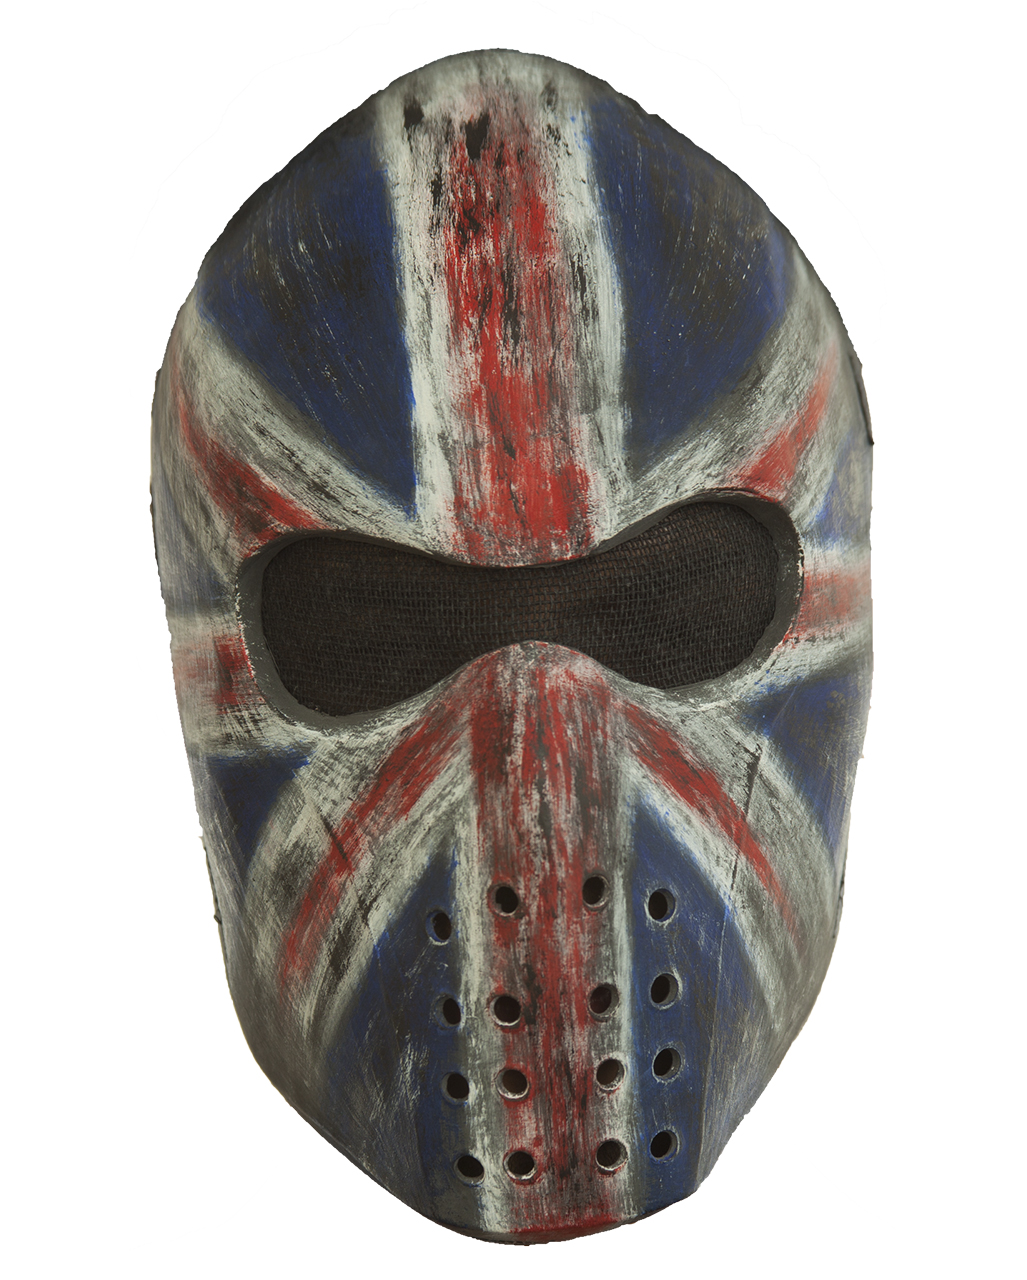 Union Jack Mask as costume accessories ✰ Horror-Shop.com